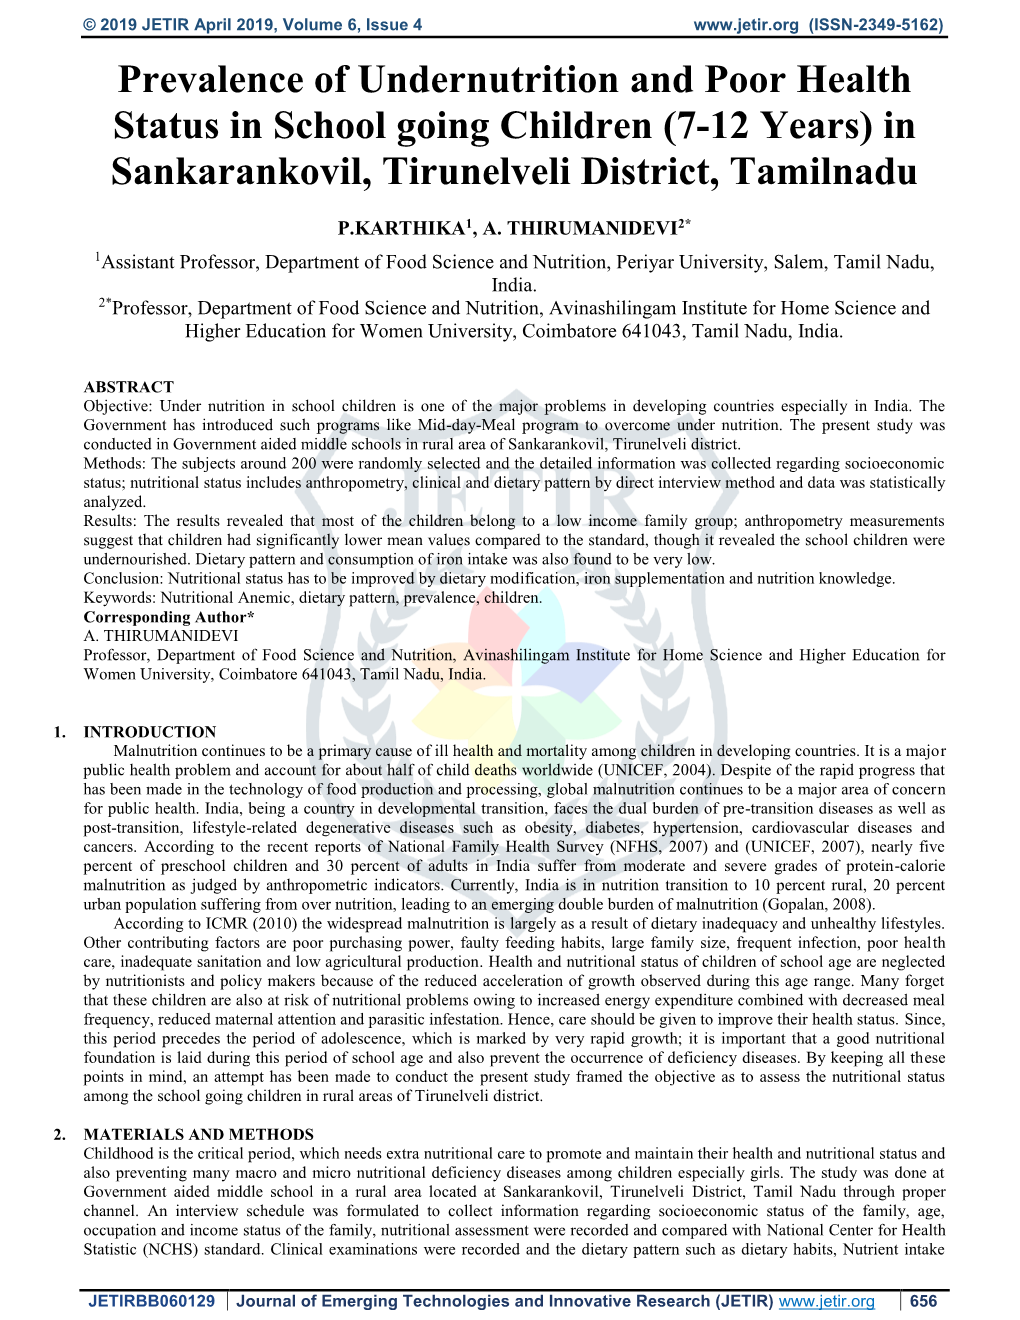 Prevalence of Undernutrition and Poor Health Status in School Going Children (7-12 Years) in Sankarankovil, Tirunelveli District, Tamilnadu